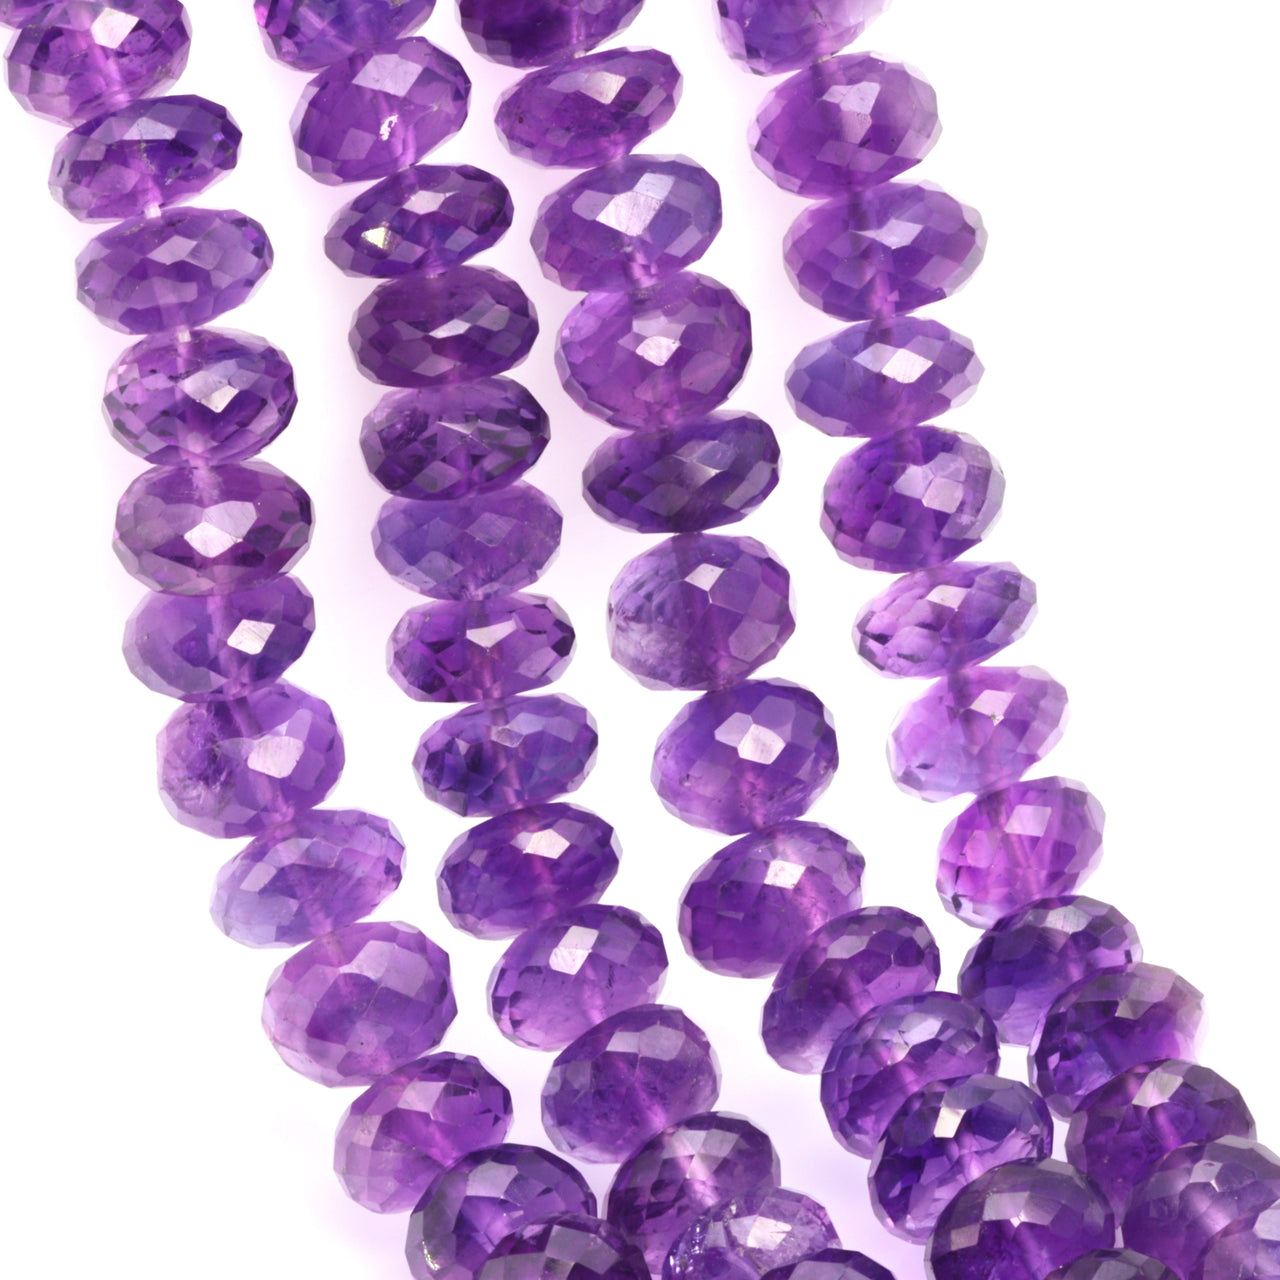 Purple Amethyst 8mm Faceted Rondelles